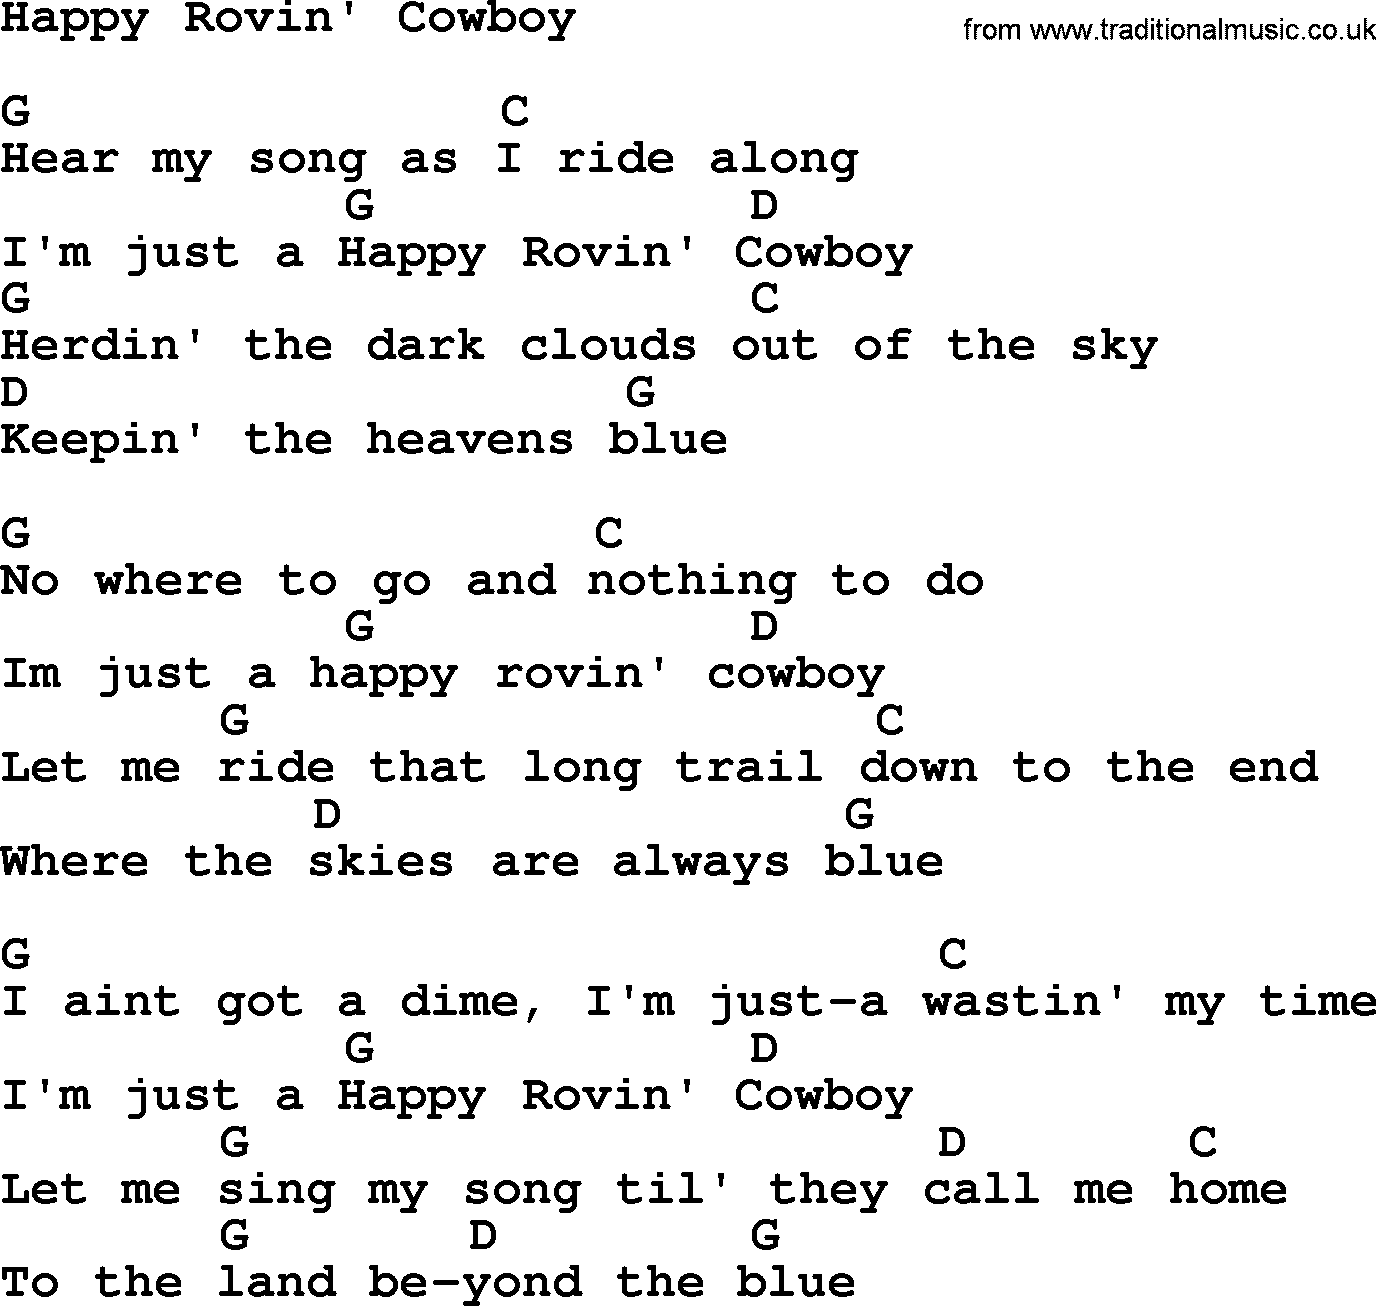 Hank Williams song Happy Rovin' Cowboy, lyrics and chords